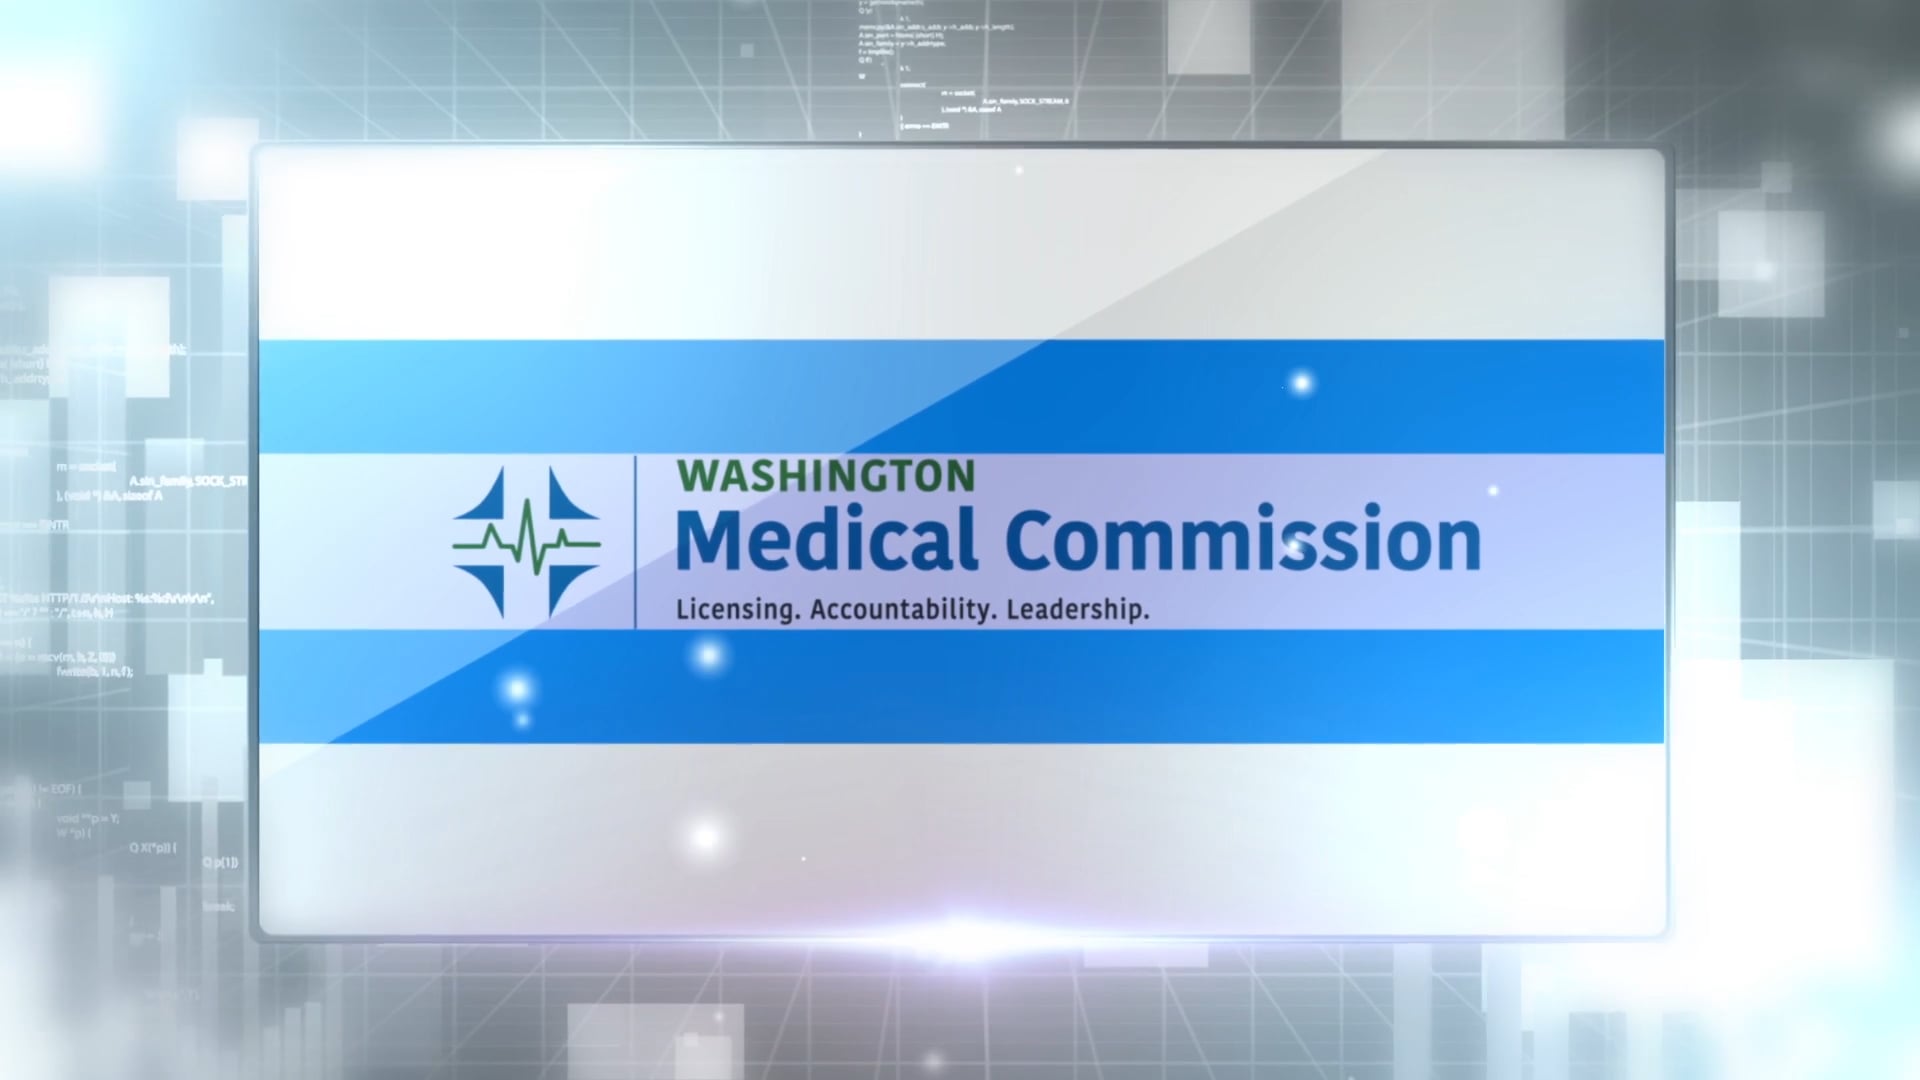 Washington Medical Commission: Annual Conference Promo